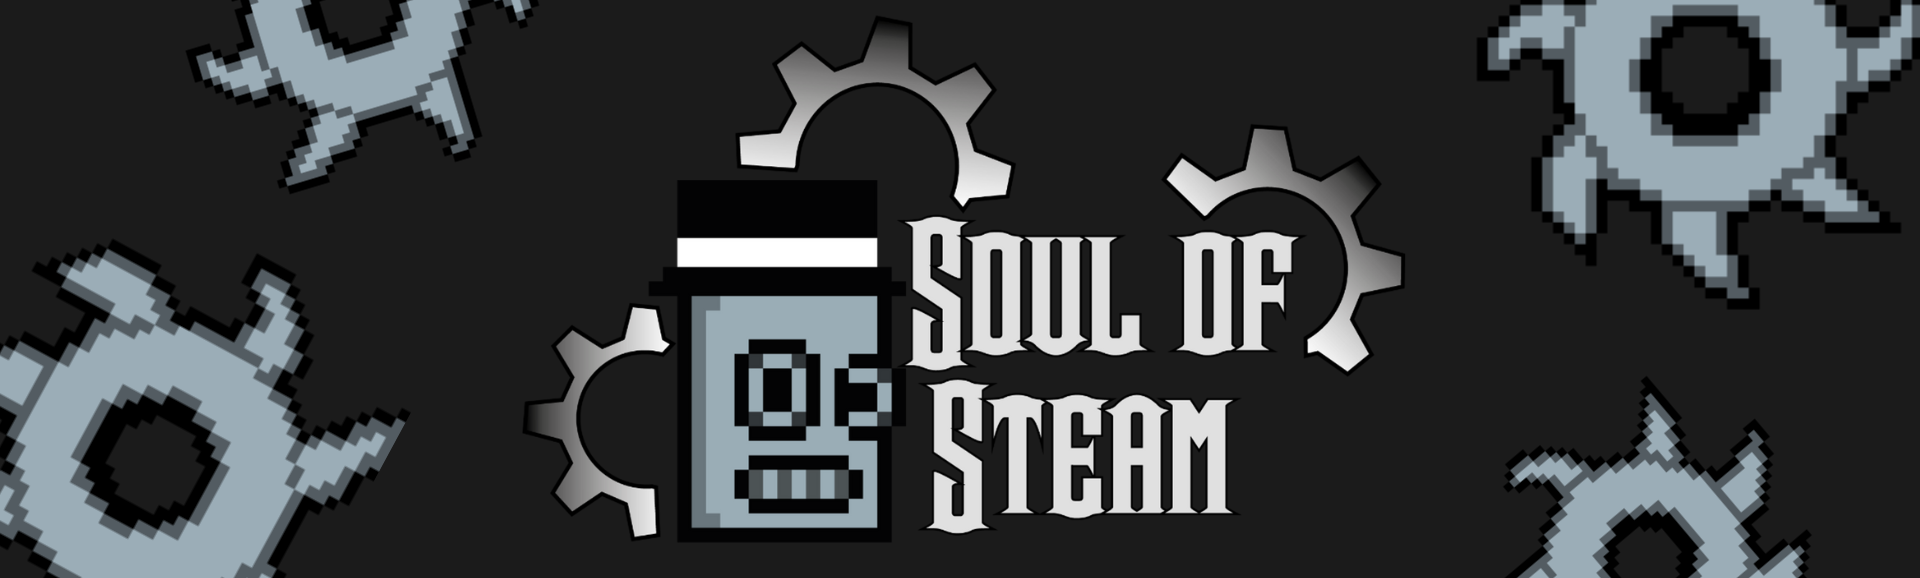 Soul of Steam